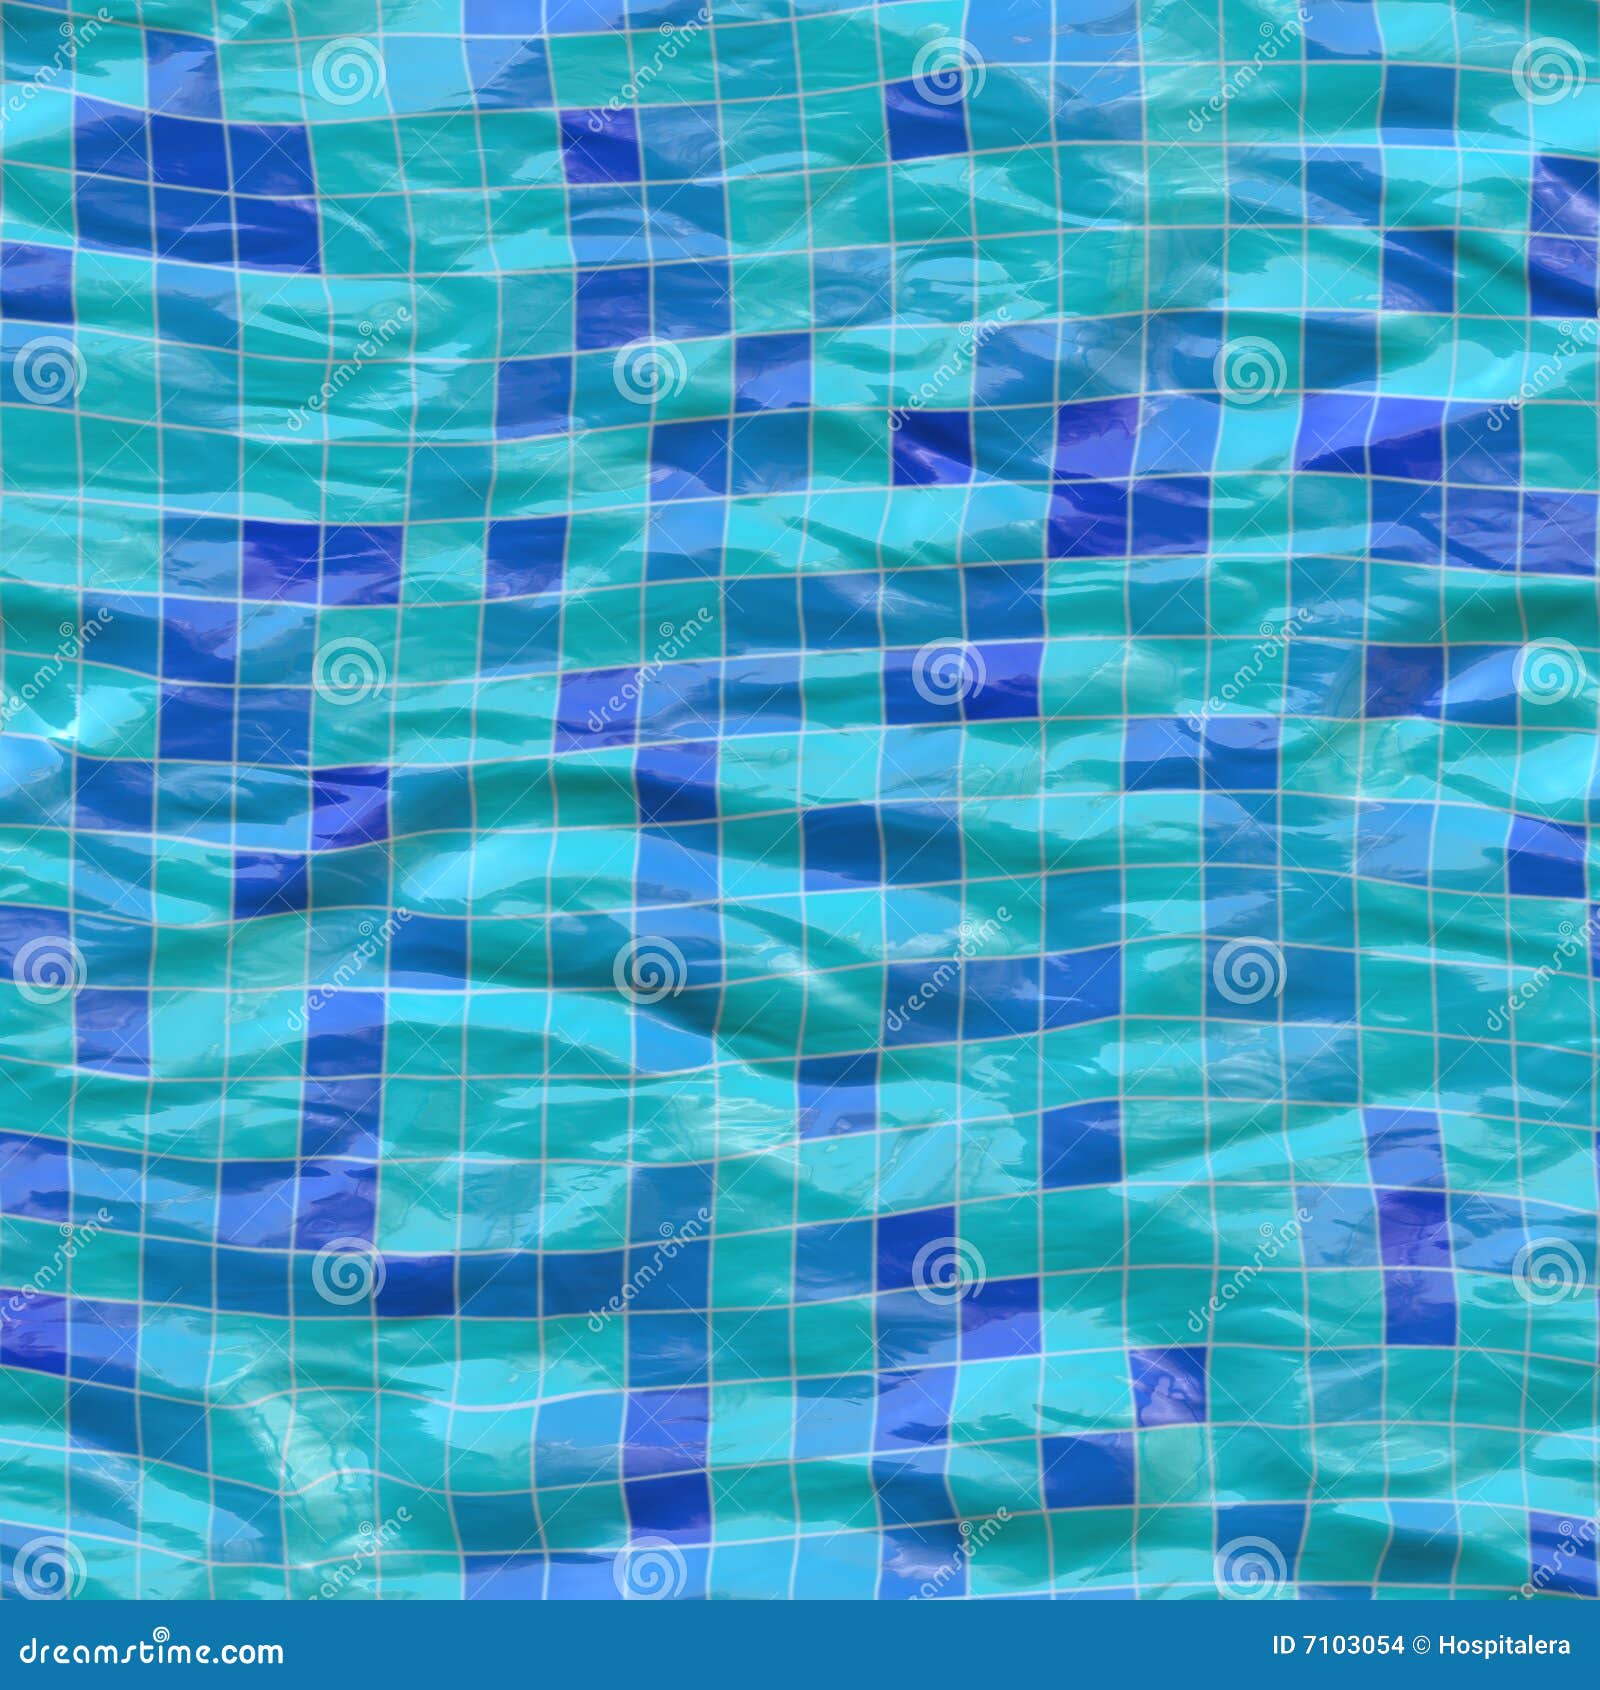 submerged tiles